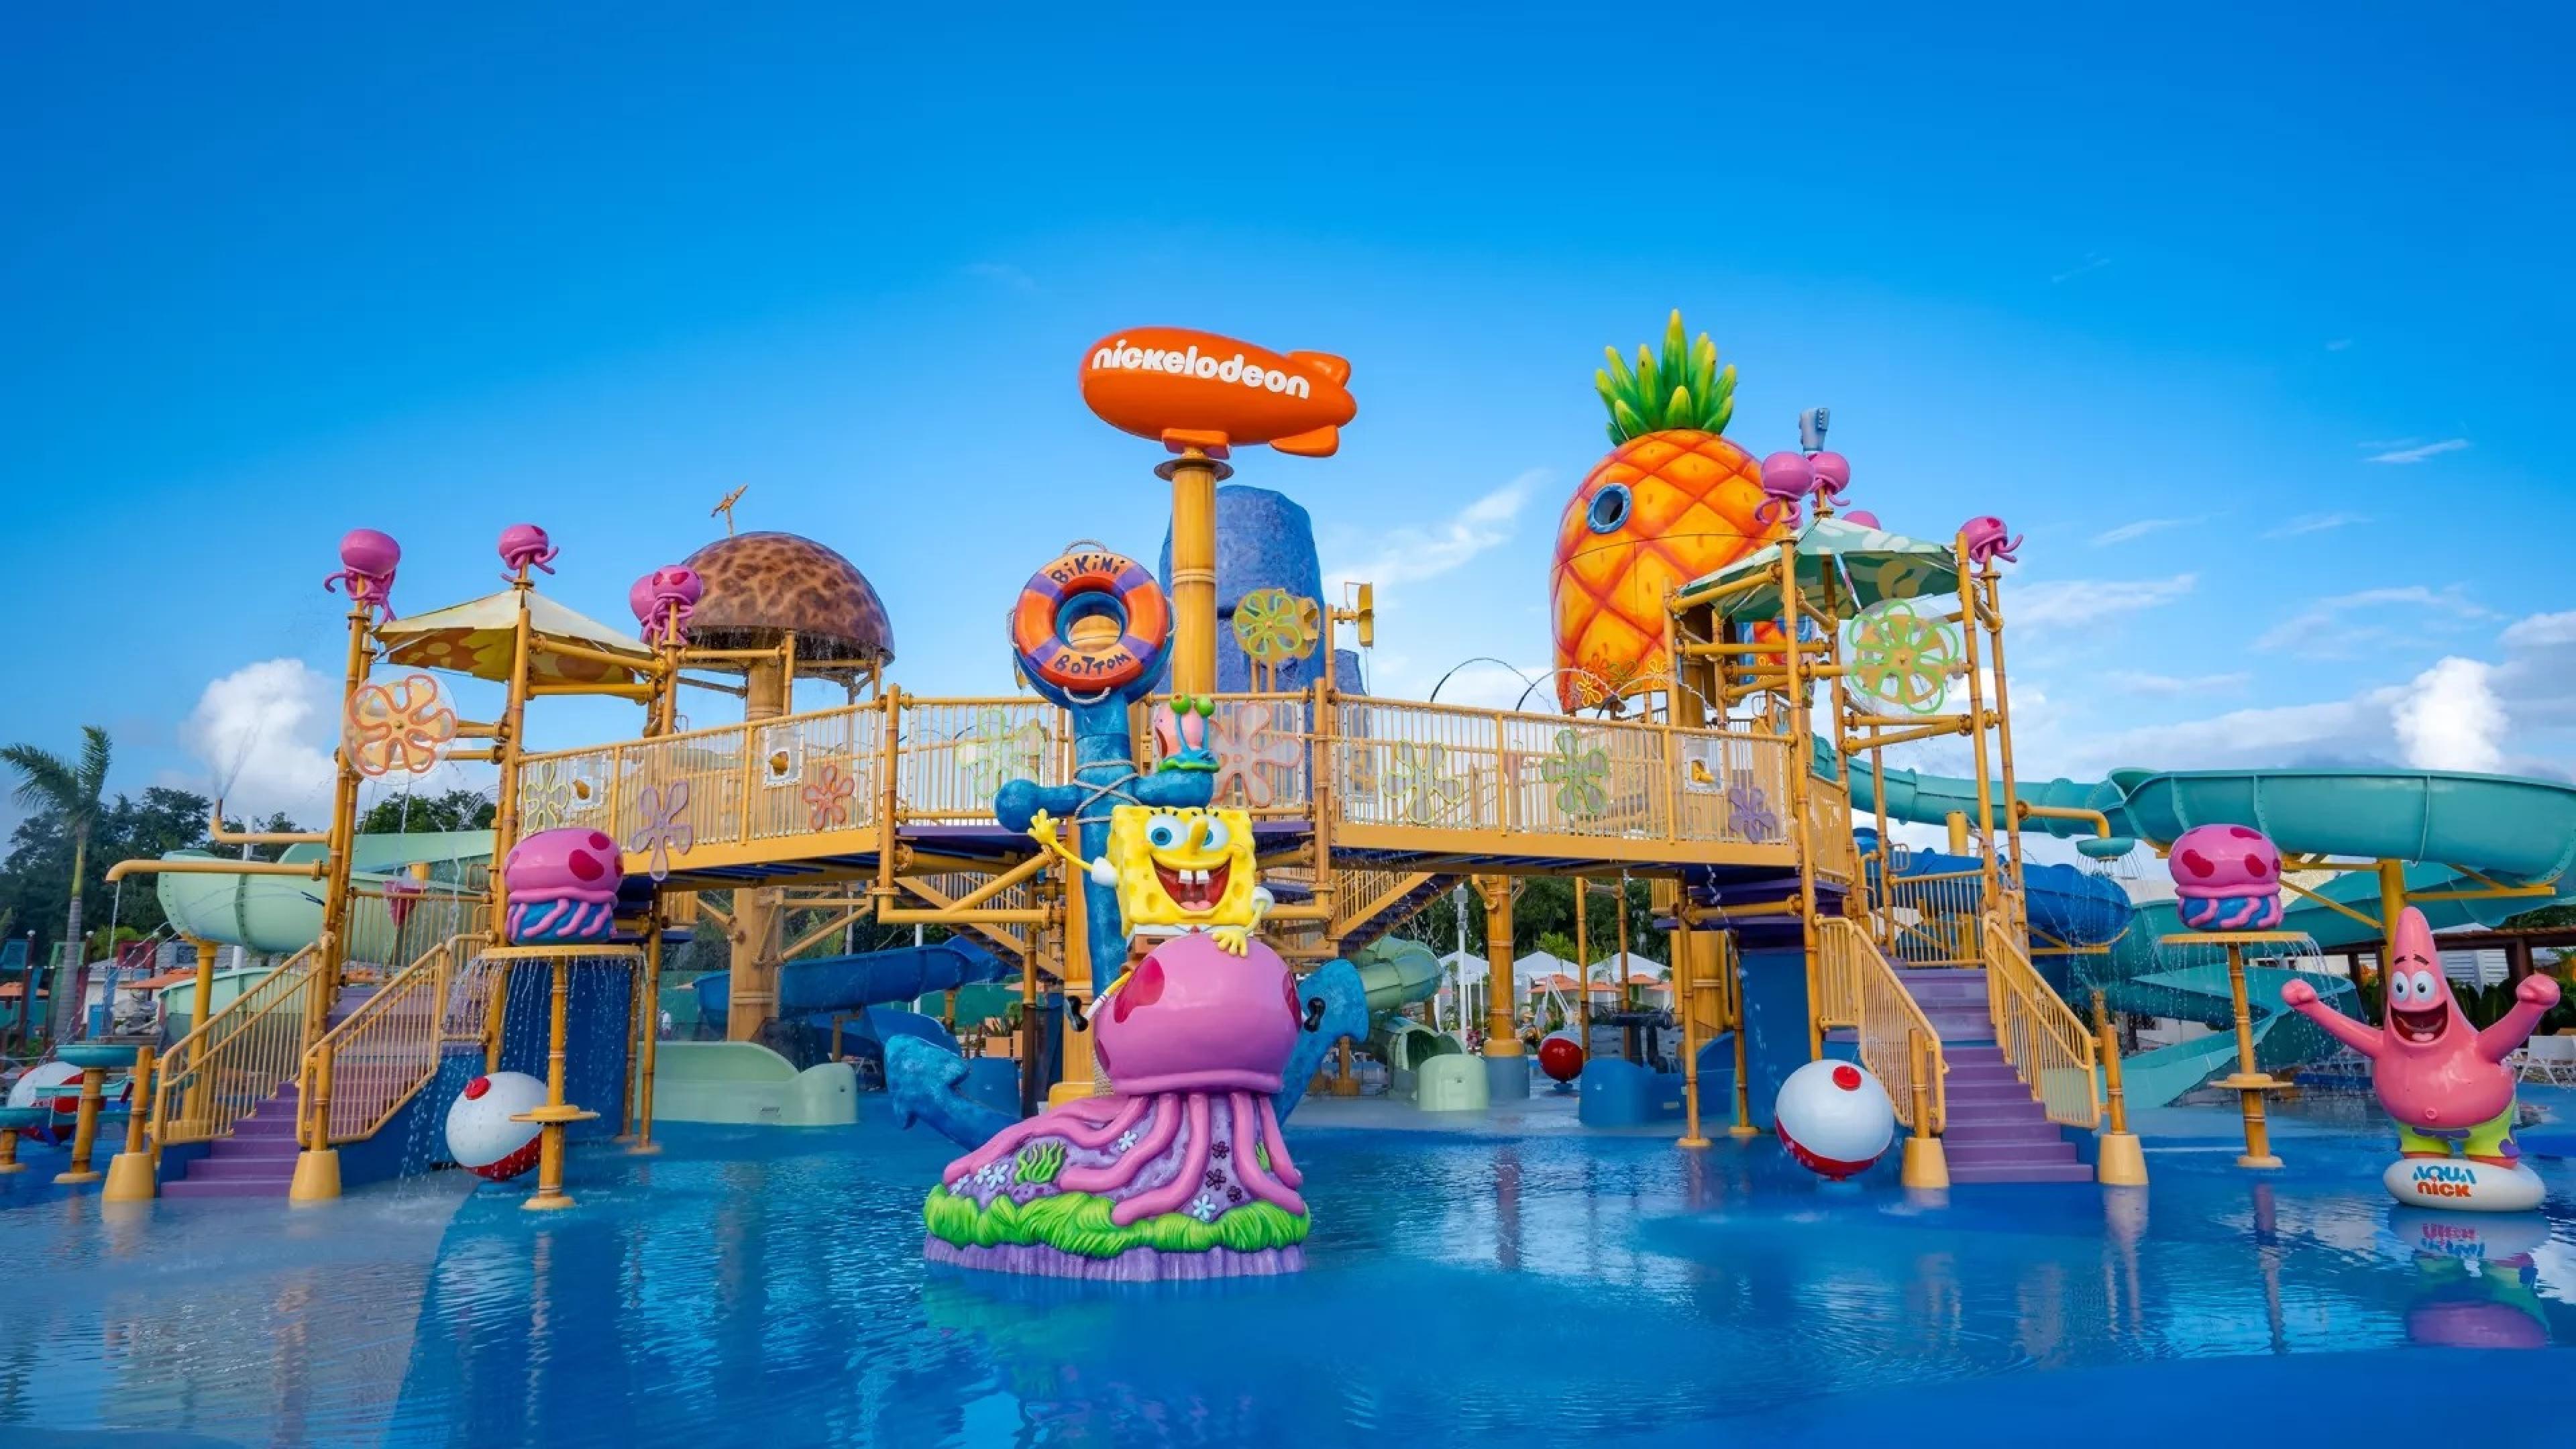 Wideshot of Nickelodeon water park with Spongebob characters